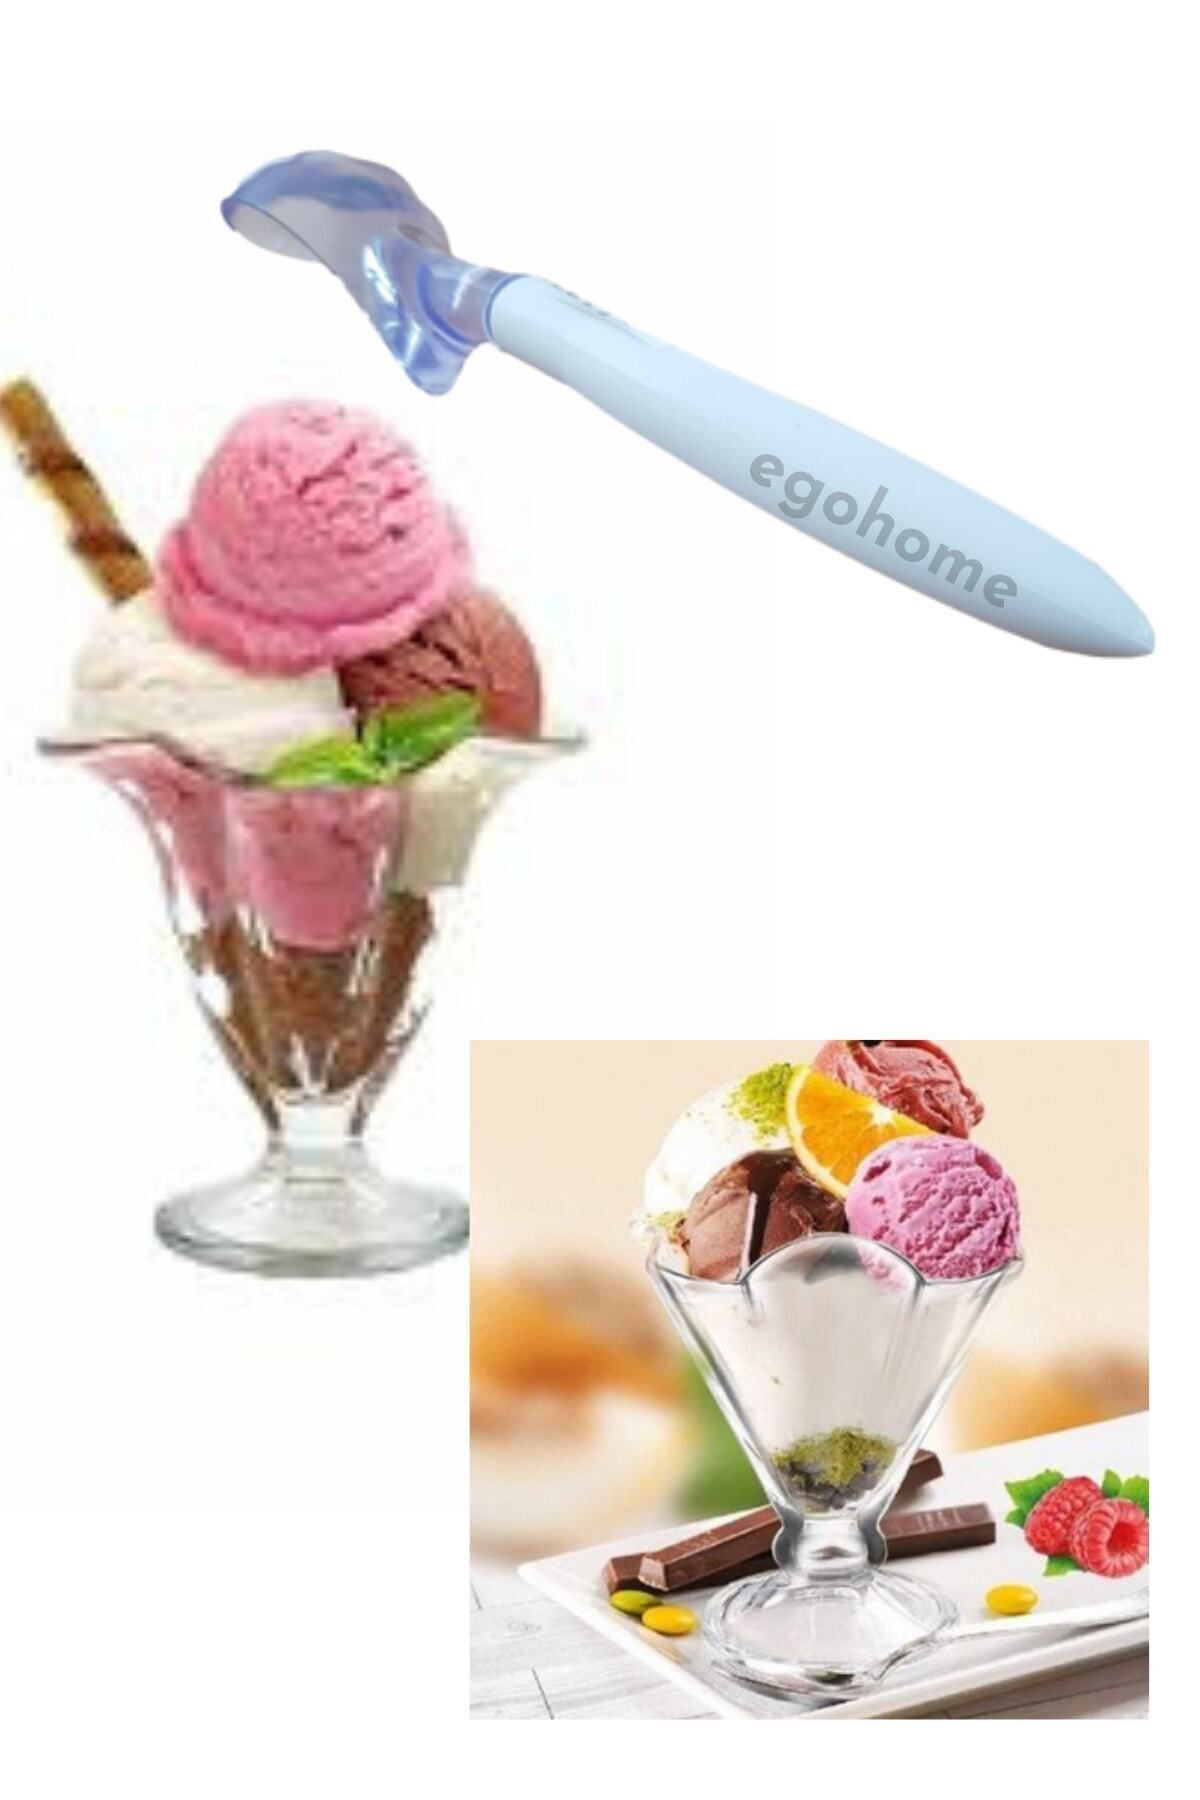 ego home Sert Plastik Dondurma ve Porsiyonlama Kaşığı Top Dondurma Kaşıgı